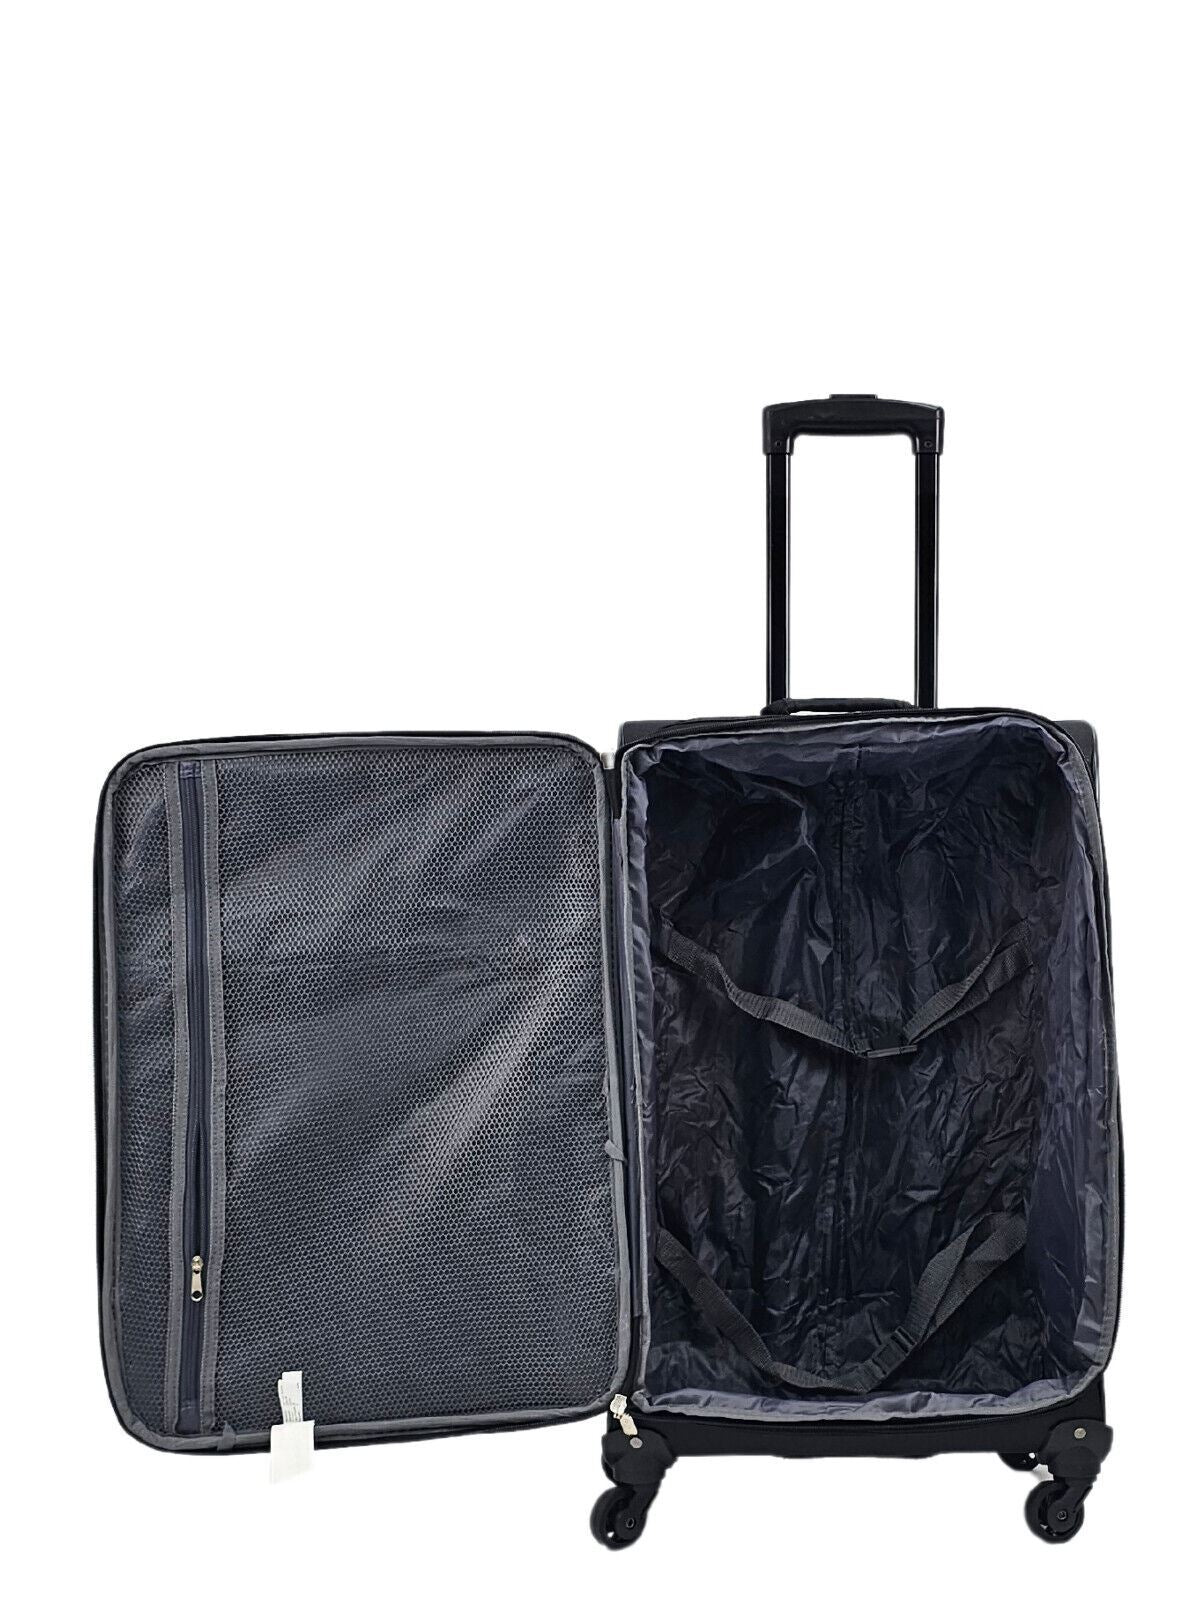 Coaling Medium Soft Shell Suitcase in Black